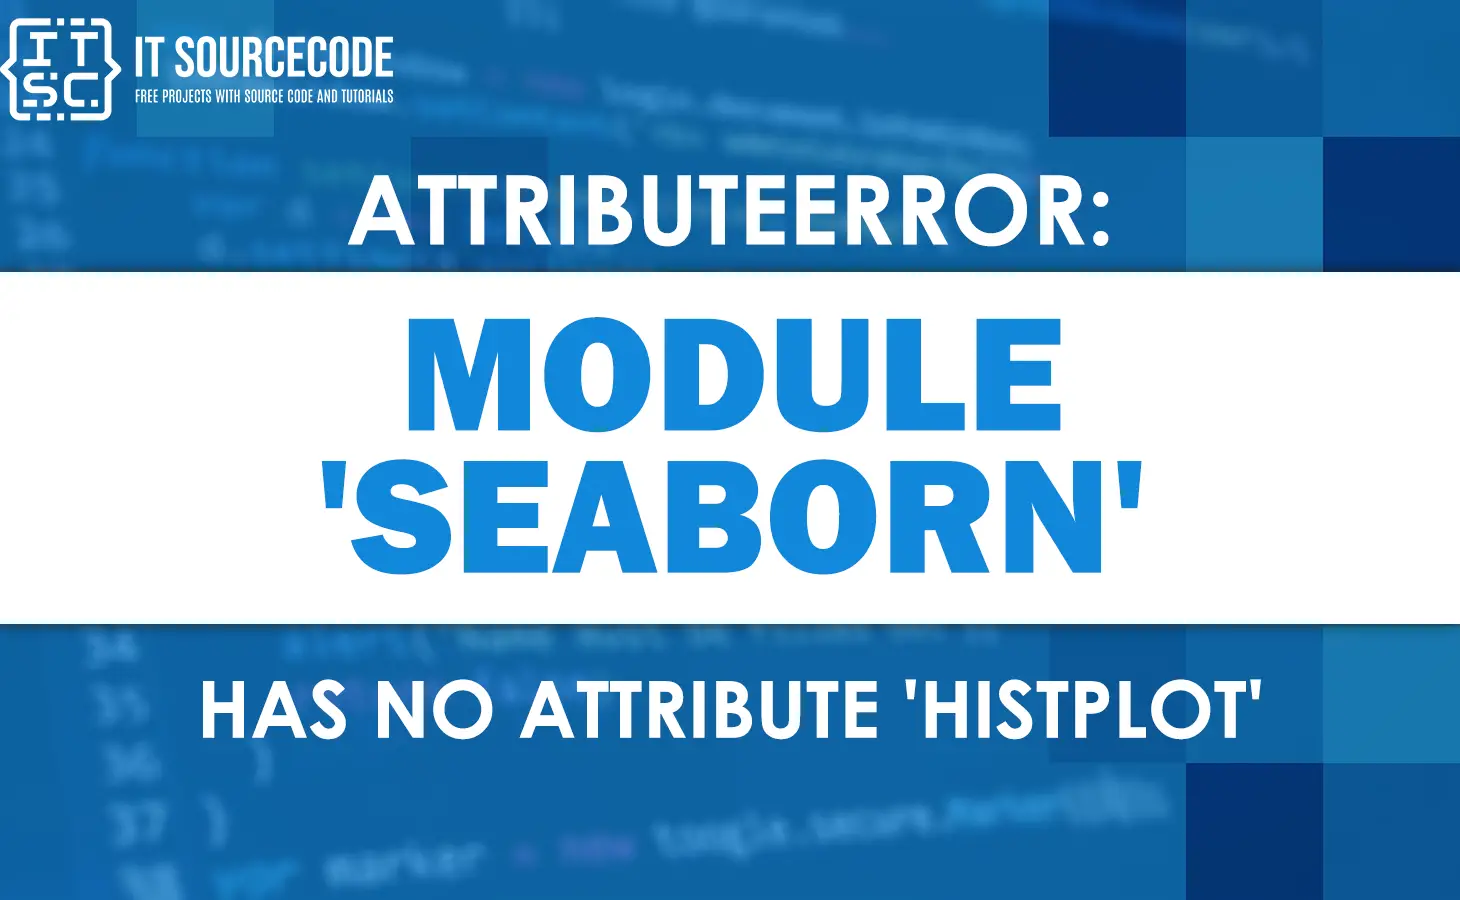 attributeerror: module seaborn has no attribute histplot